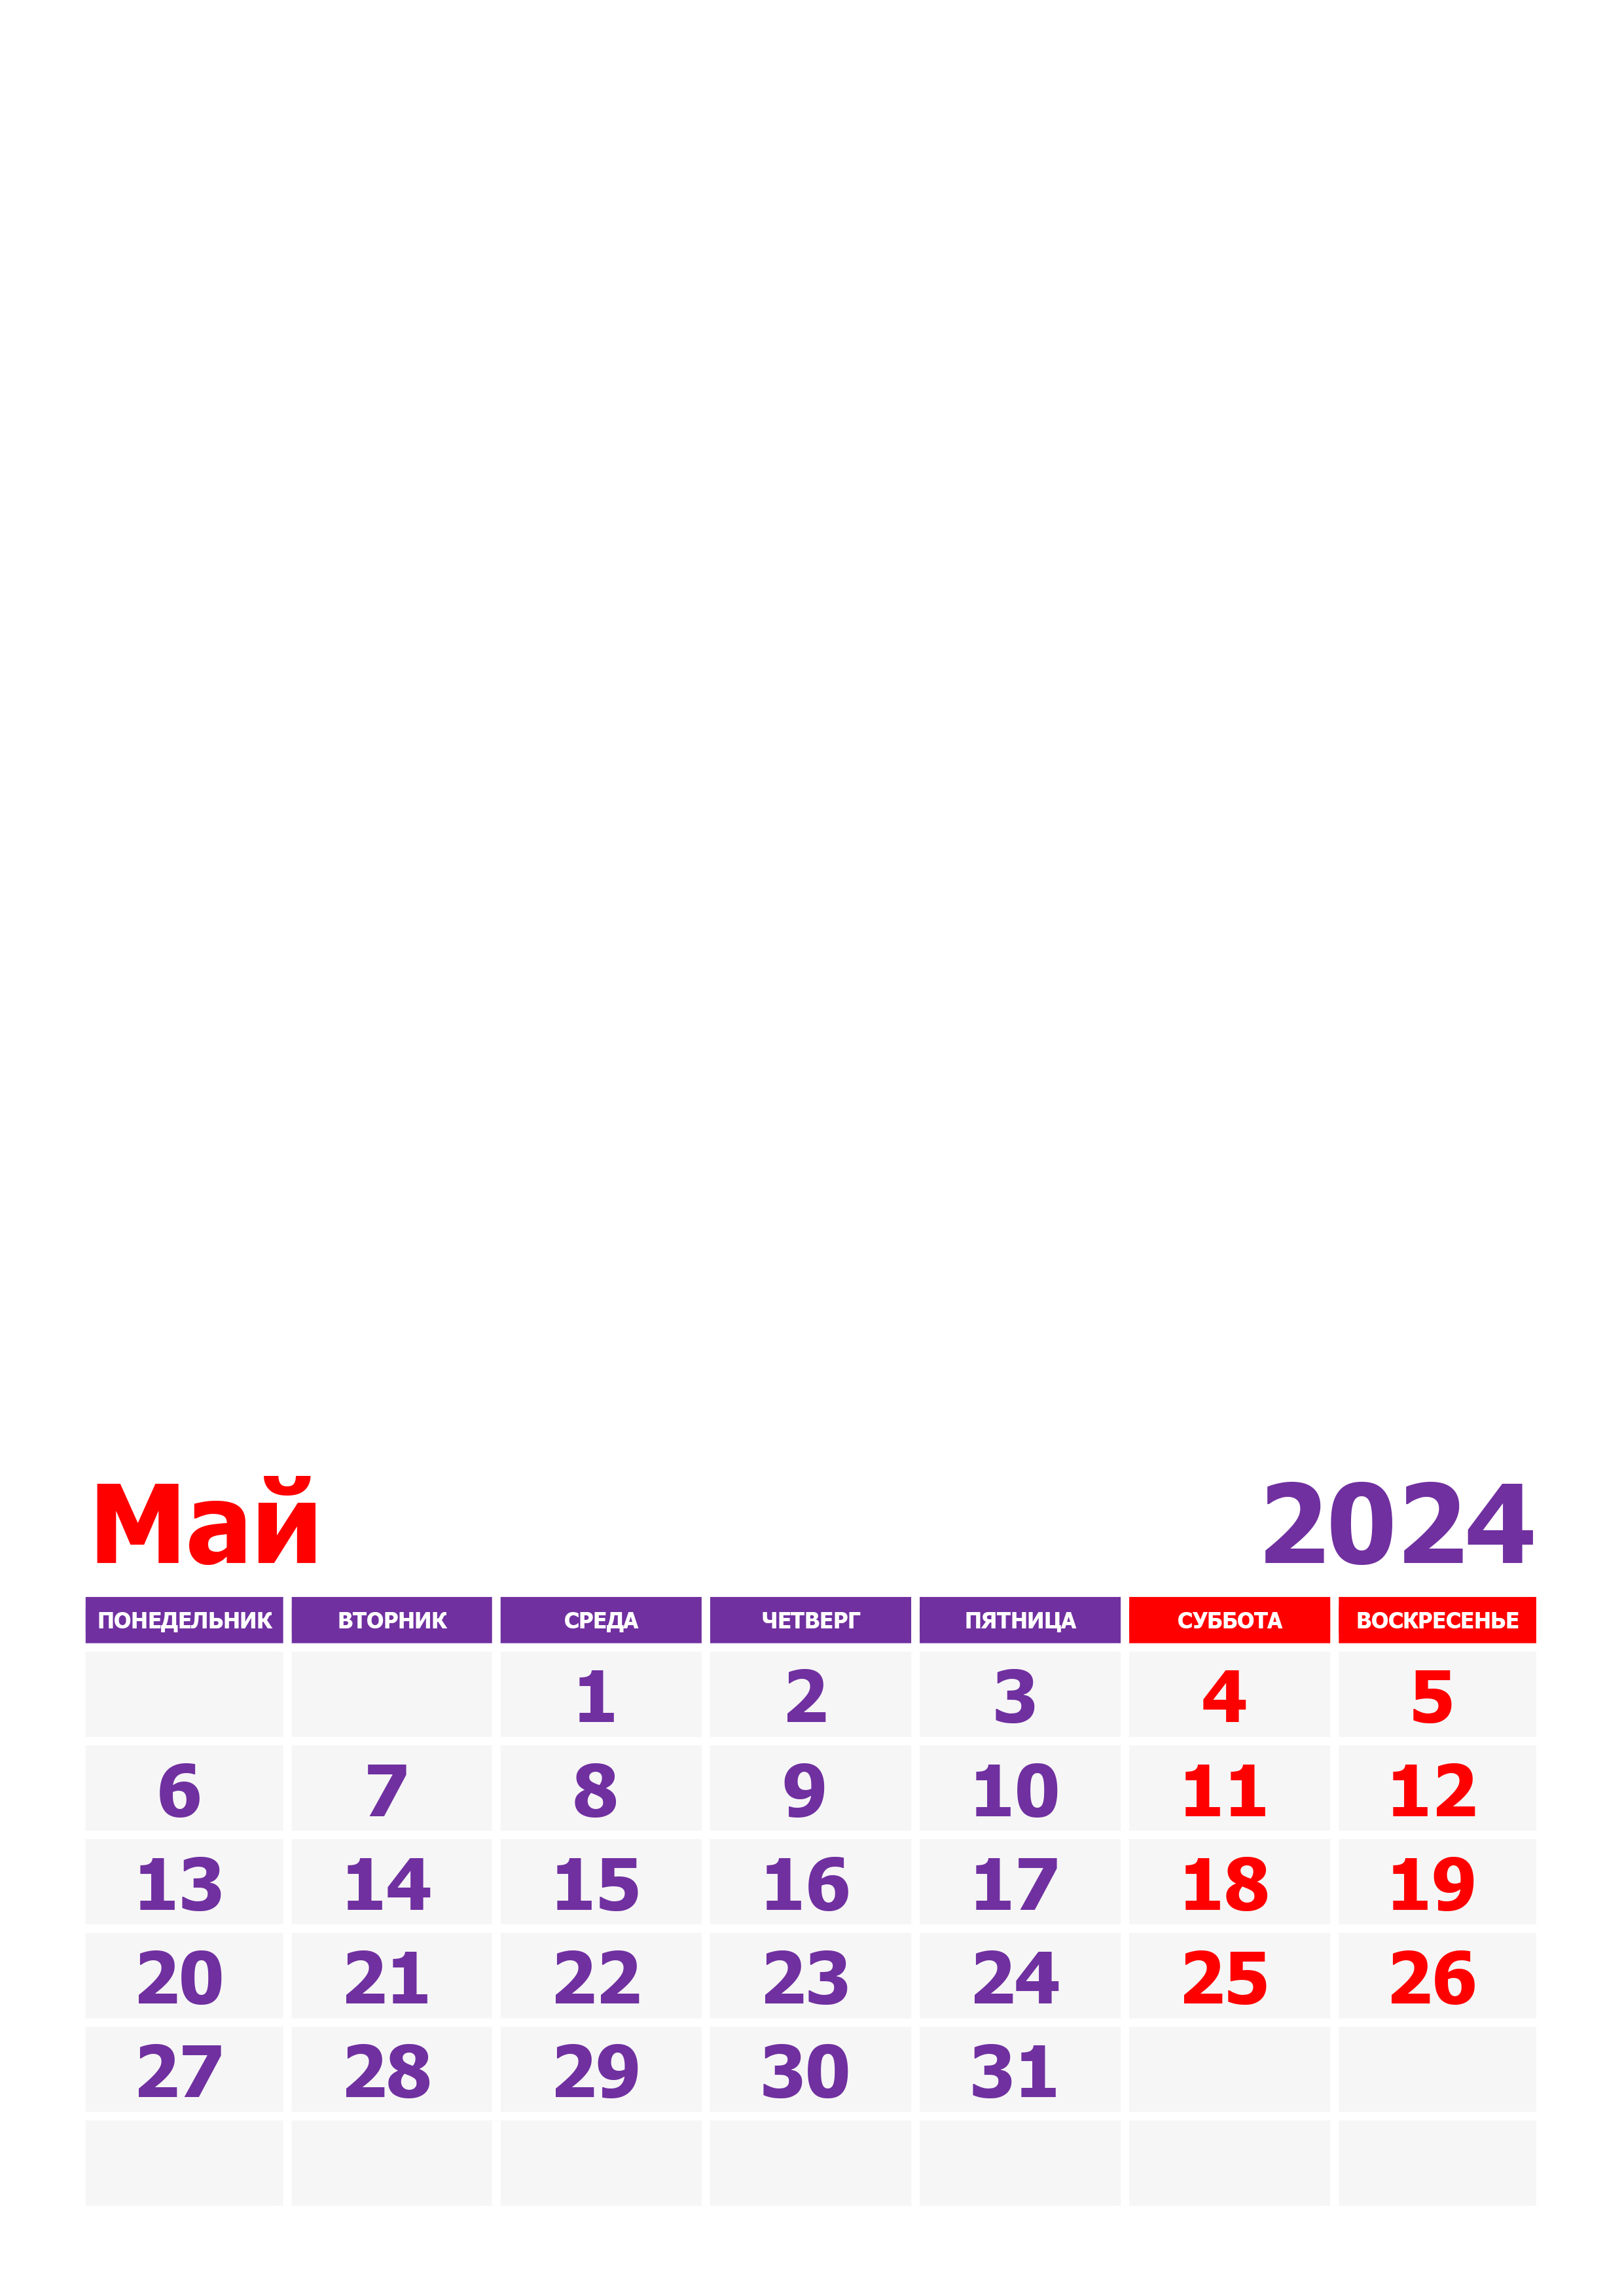 Сколько дней осталось до 4 мая 2024. Календарььна май2024. Май 2024. Vrfktylfhm YF VF 2024. Май 2024 календ.